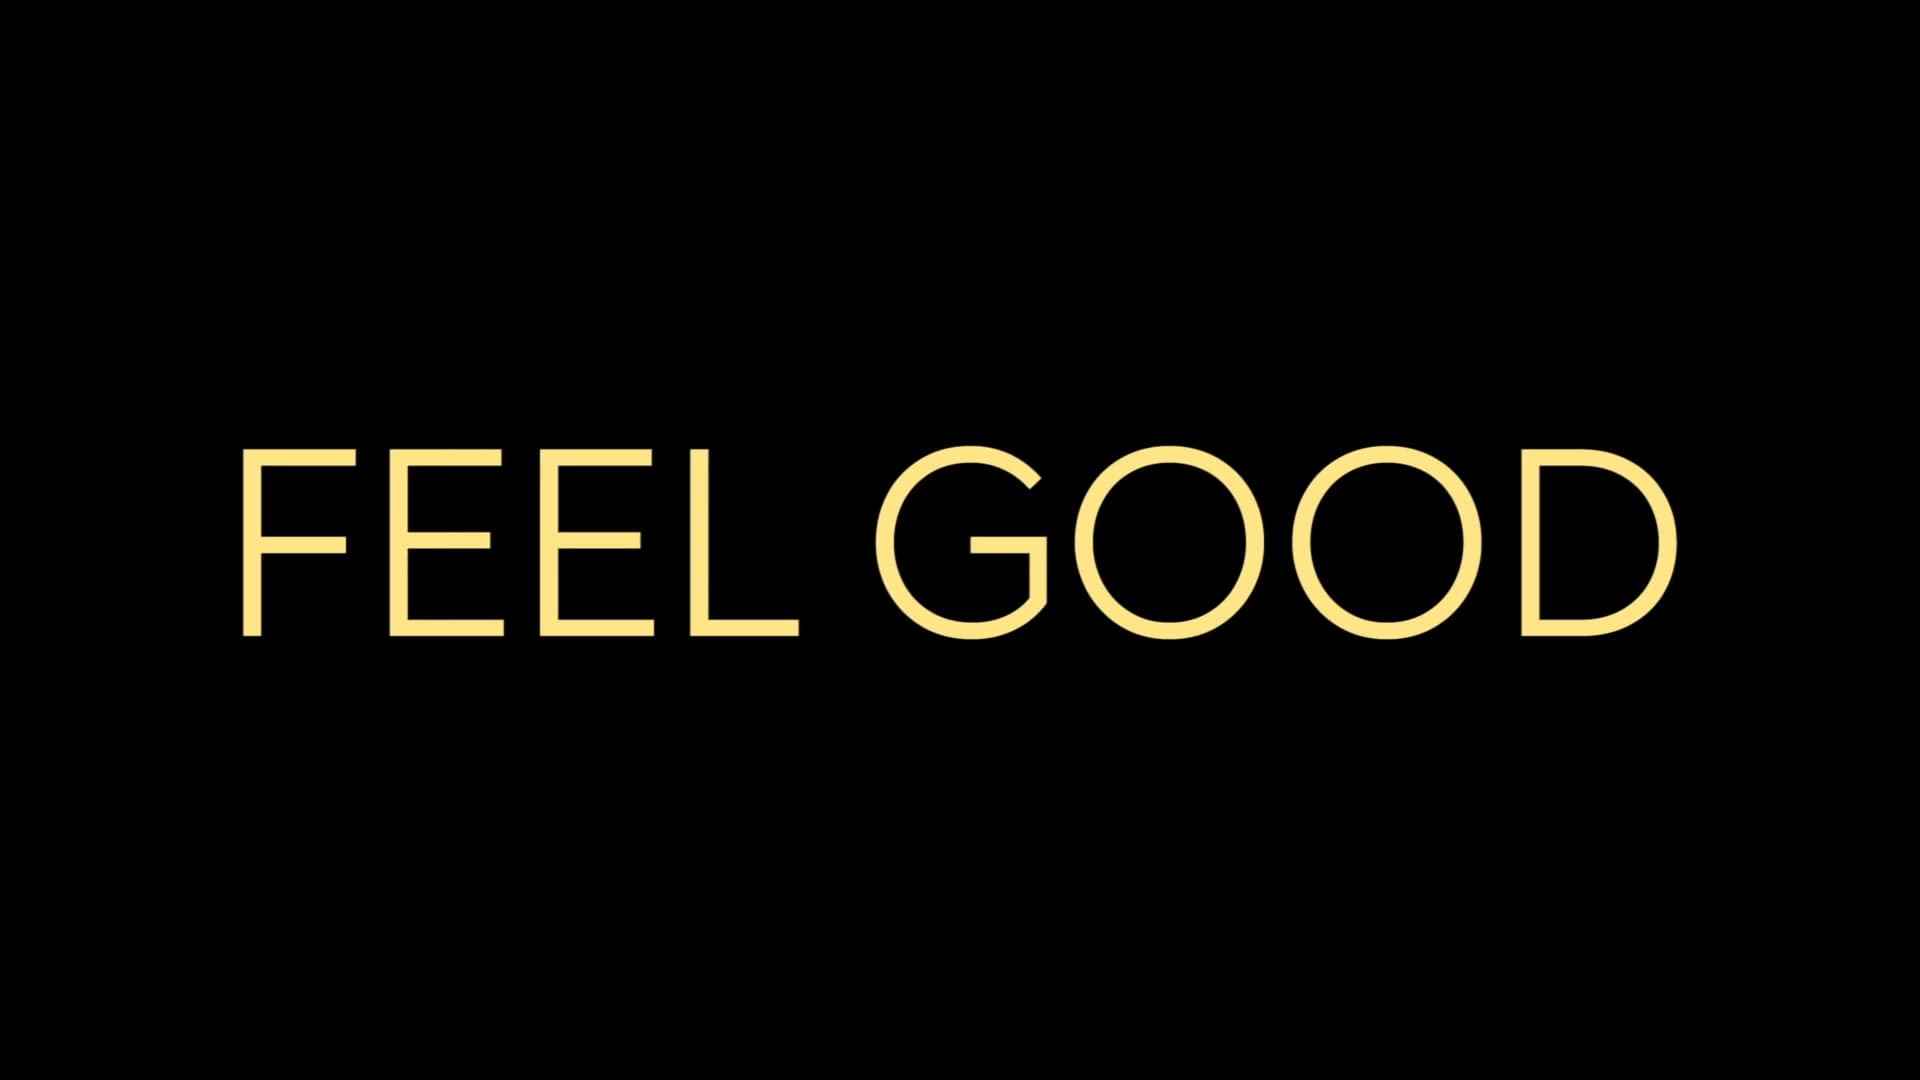 Feel Good Netflix Trailer, Netflix Comedy Series, Netflix Drama Series, Netflix LGBTQ Shows, Coming to Netflix in March 2020